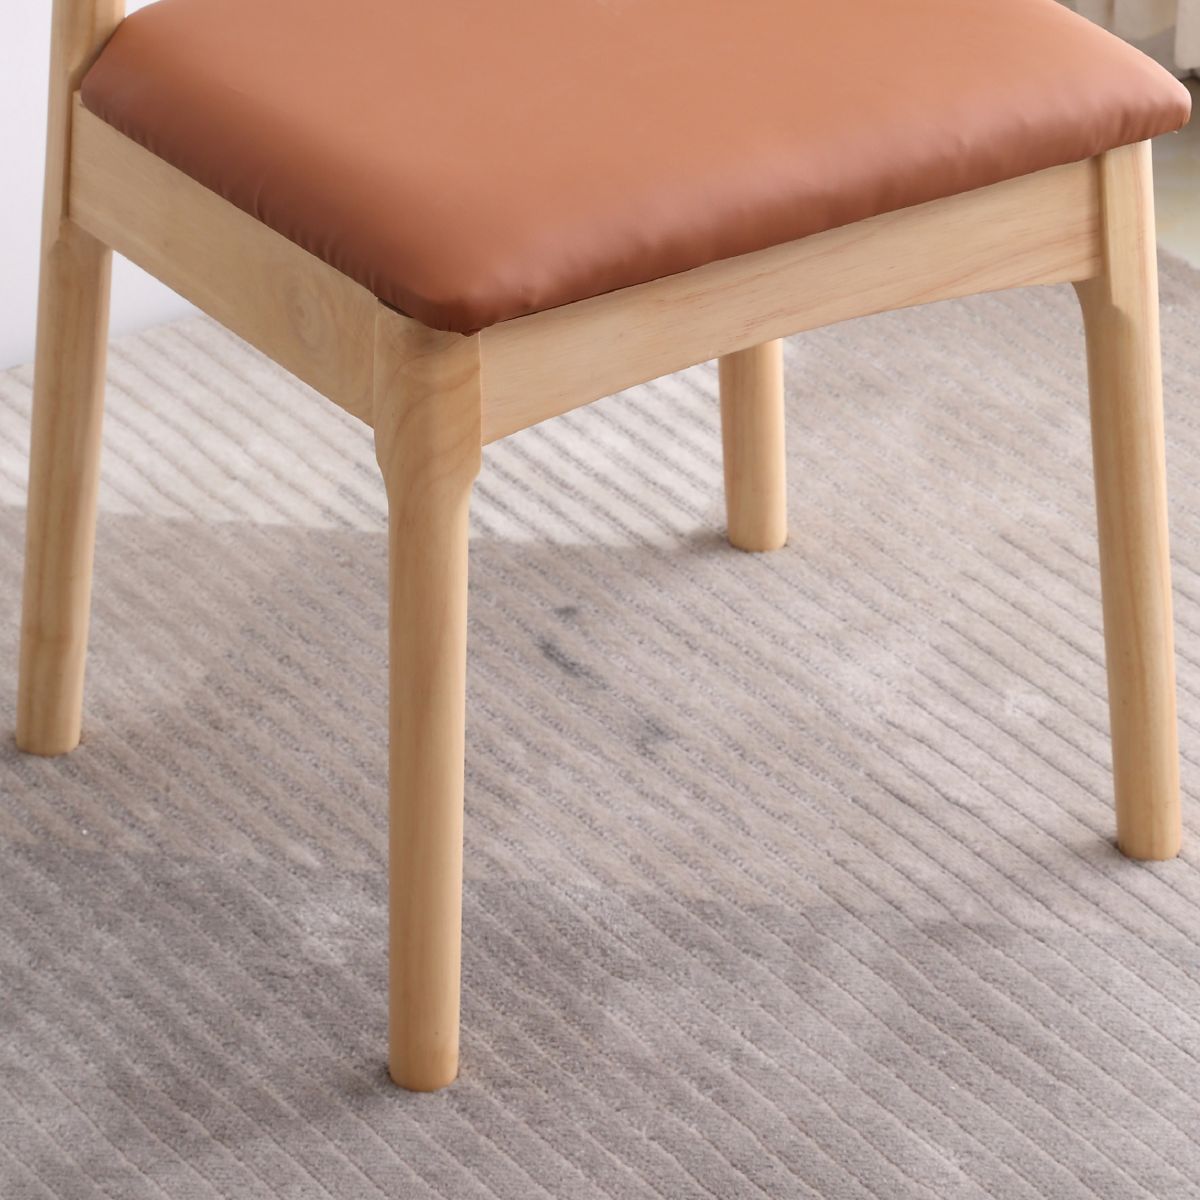 Sedia laterale scandinava interna aperta posteriore imbottita sedia sala da pranzo in legno